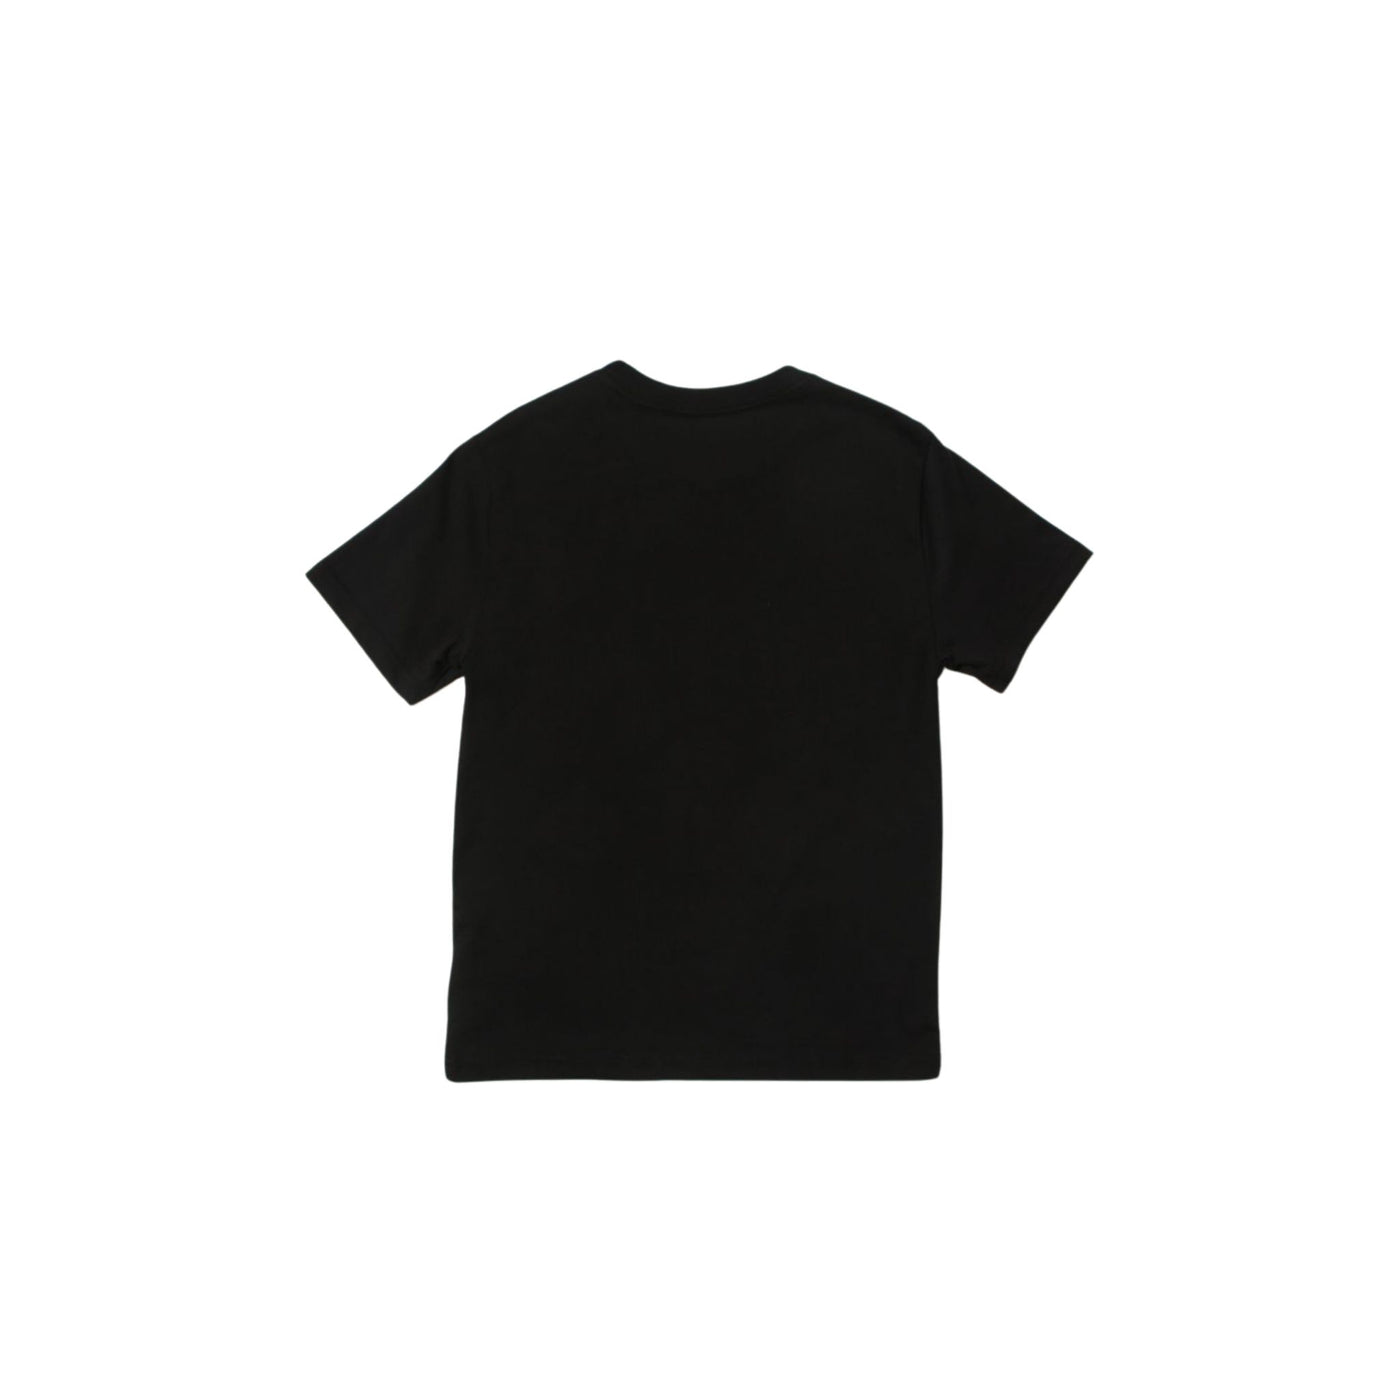 T-shirt bambino nera Polo Ralph Lauren vista retro